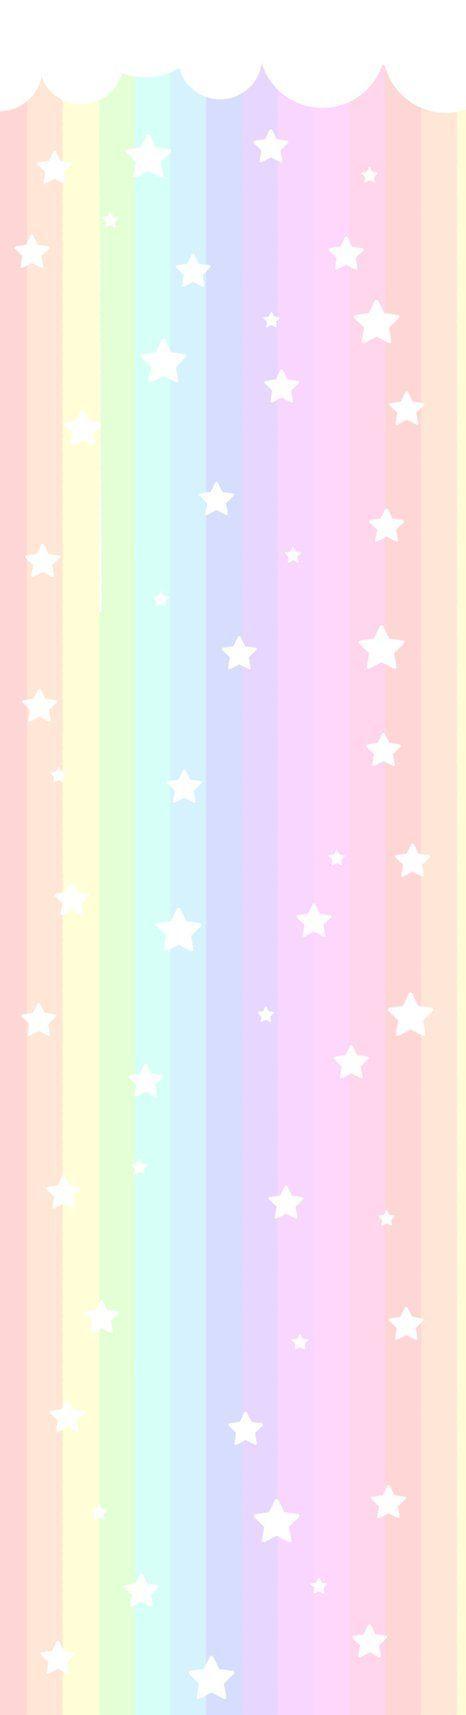 Pastel Rainbow Tumblr Wallpaper Full HD Click Wallpaper